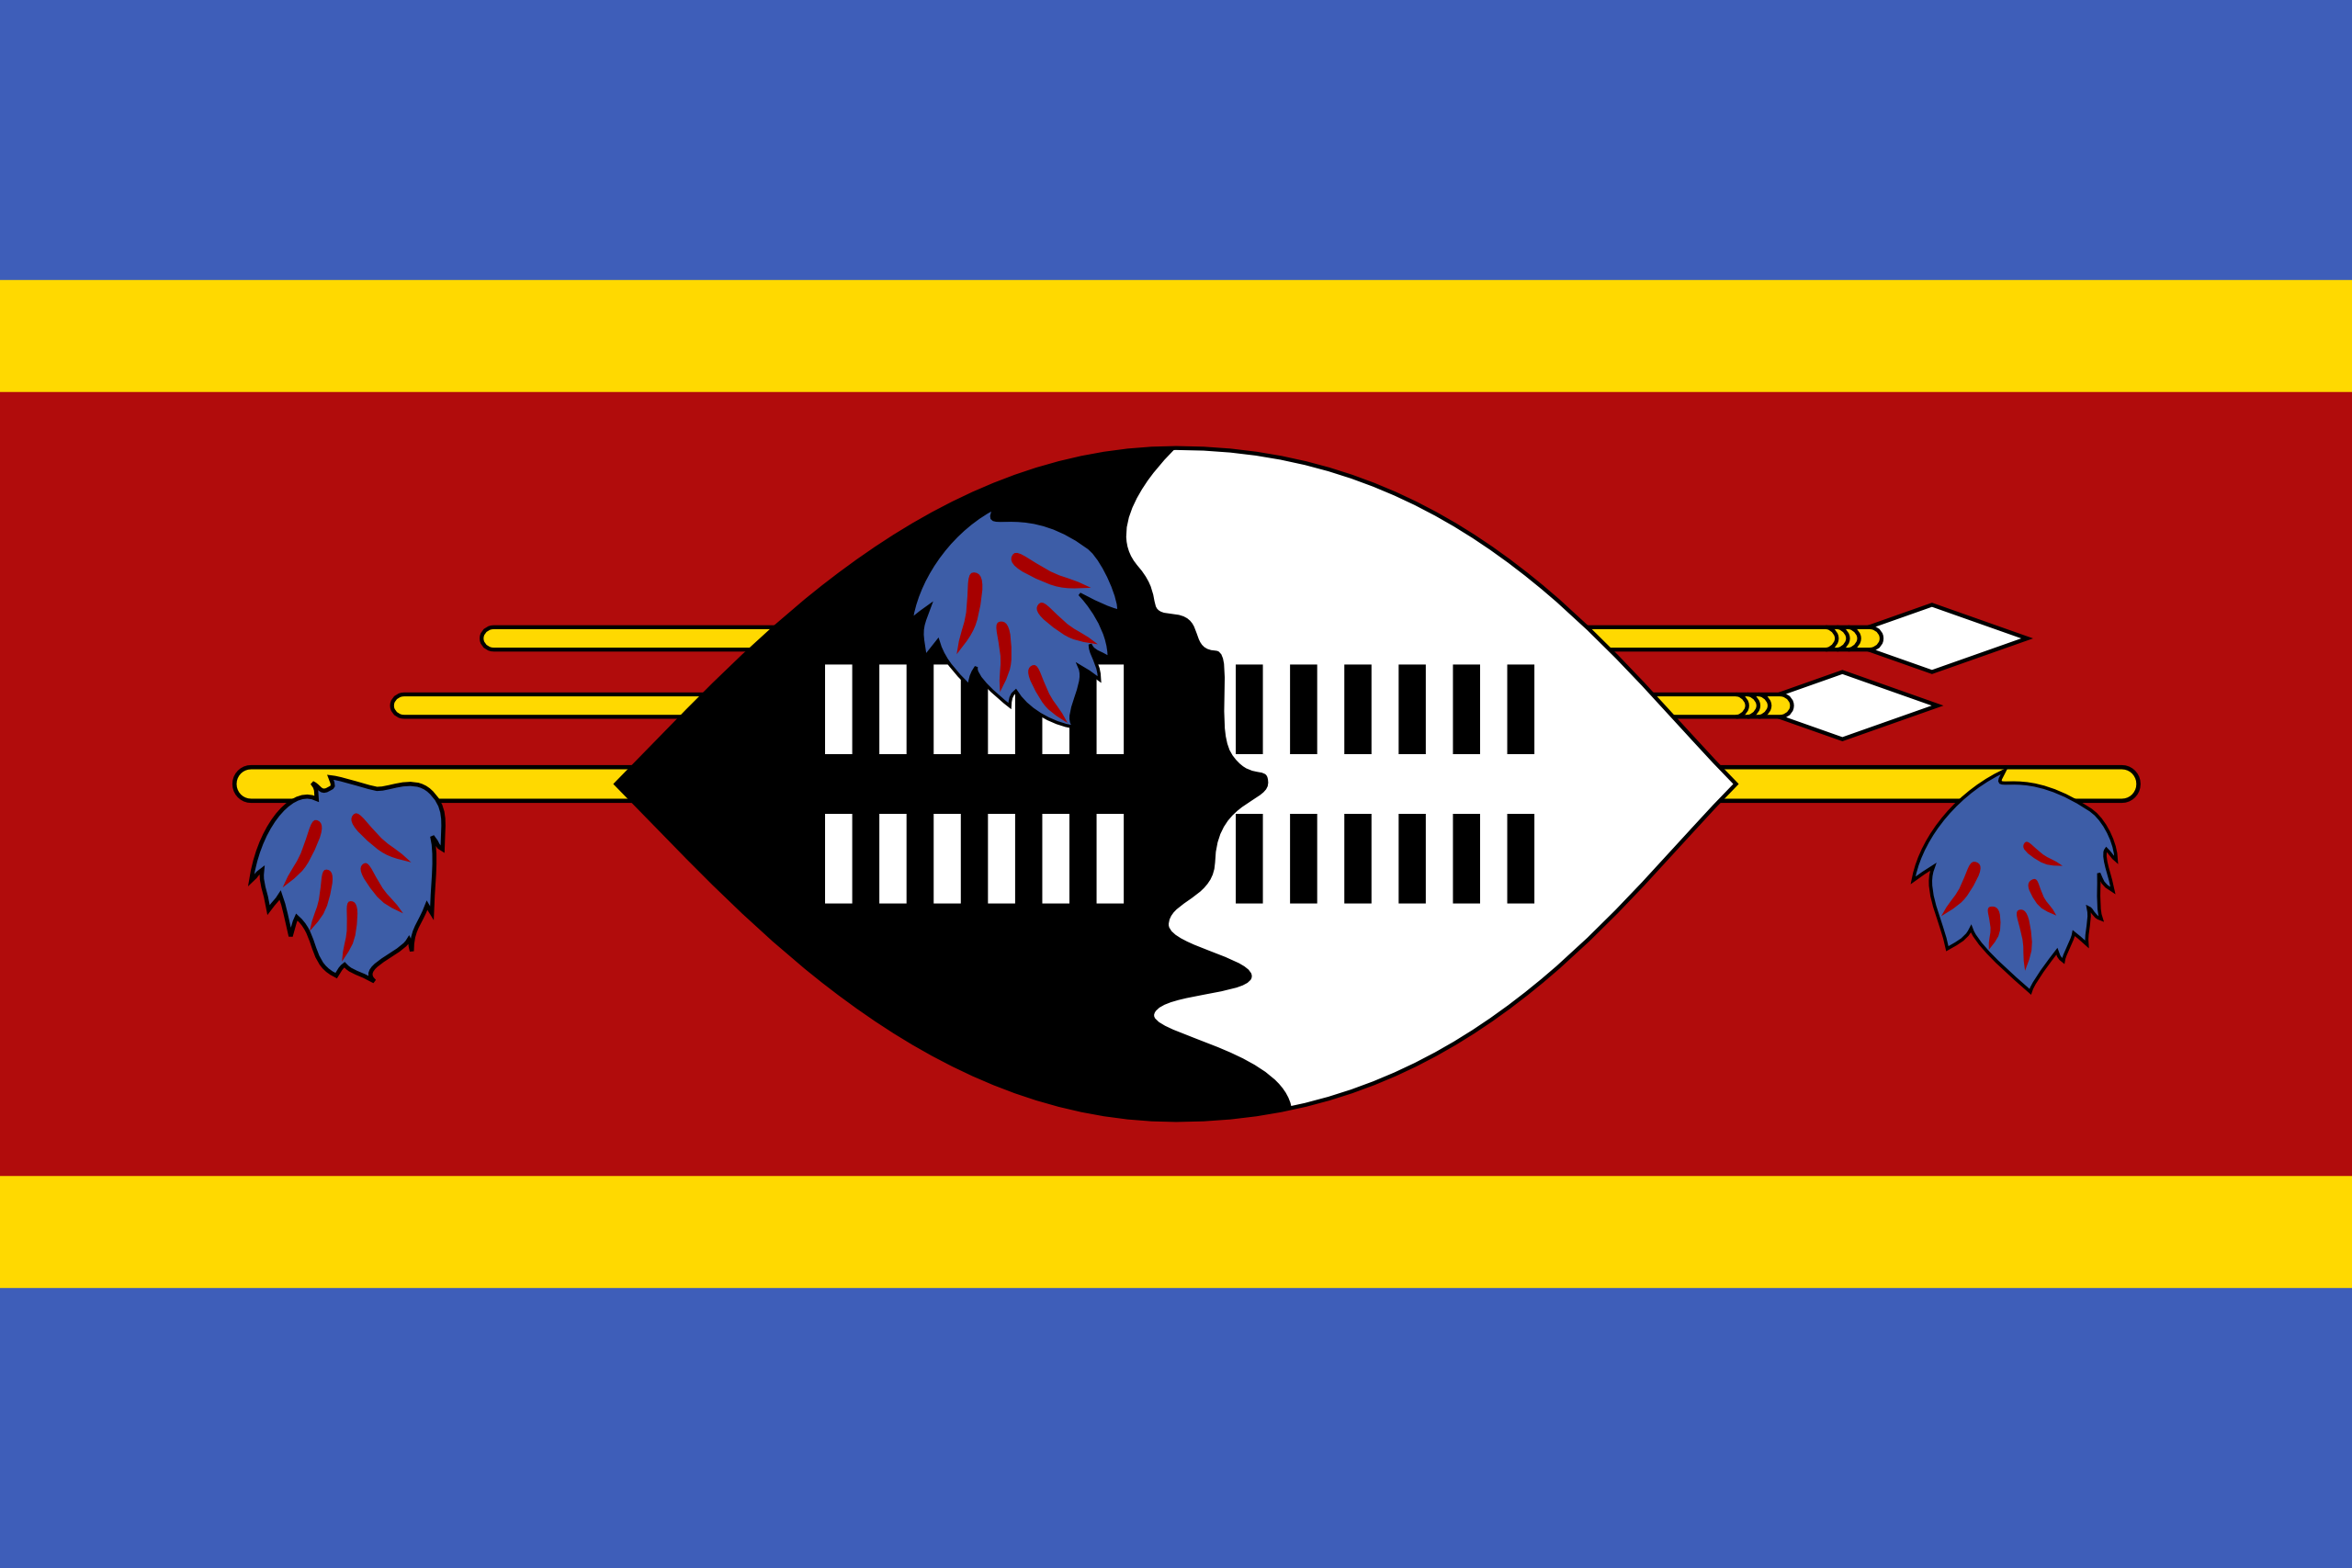 Eswatini's flag